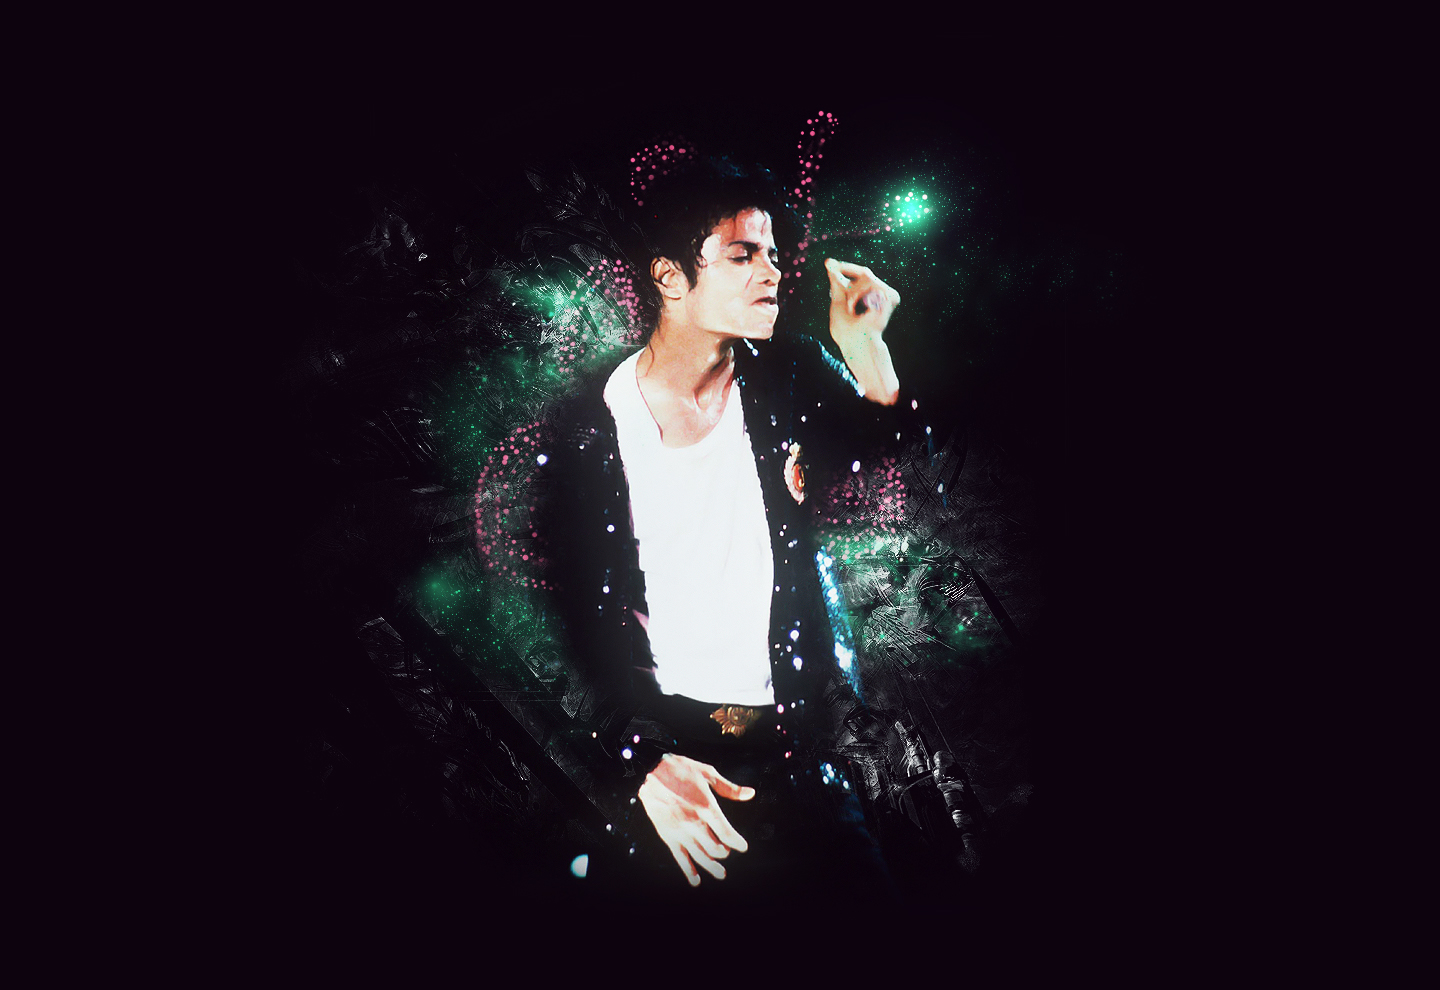 Cool Michael Jackson Wallpapers